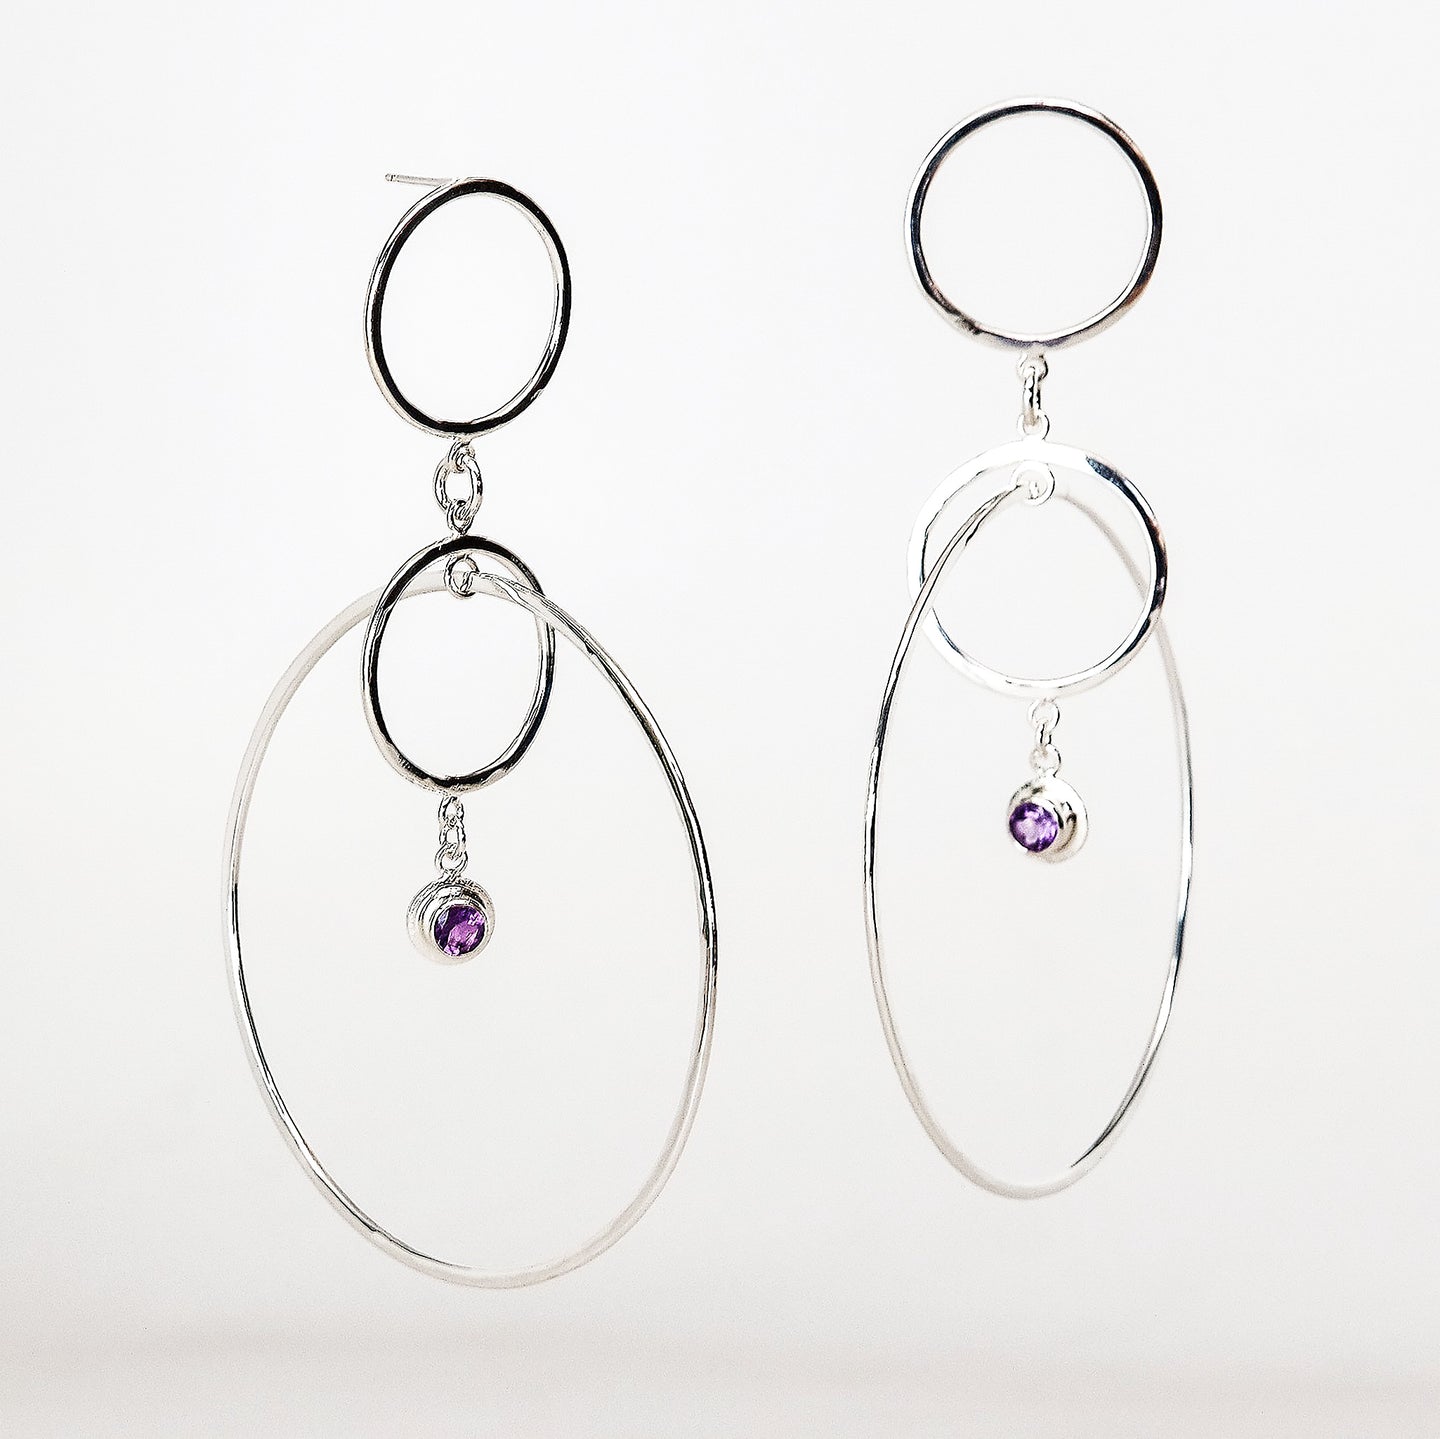 Orbs Earrings - Sterling Silver, Amethyst Faceted Gemstones - TIN HAUS Jewelry